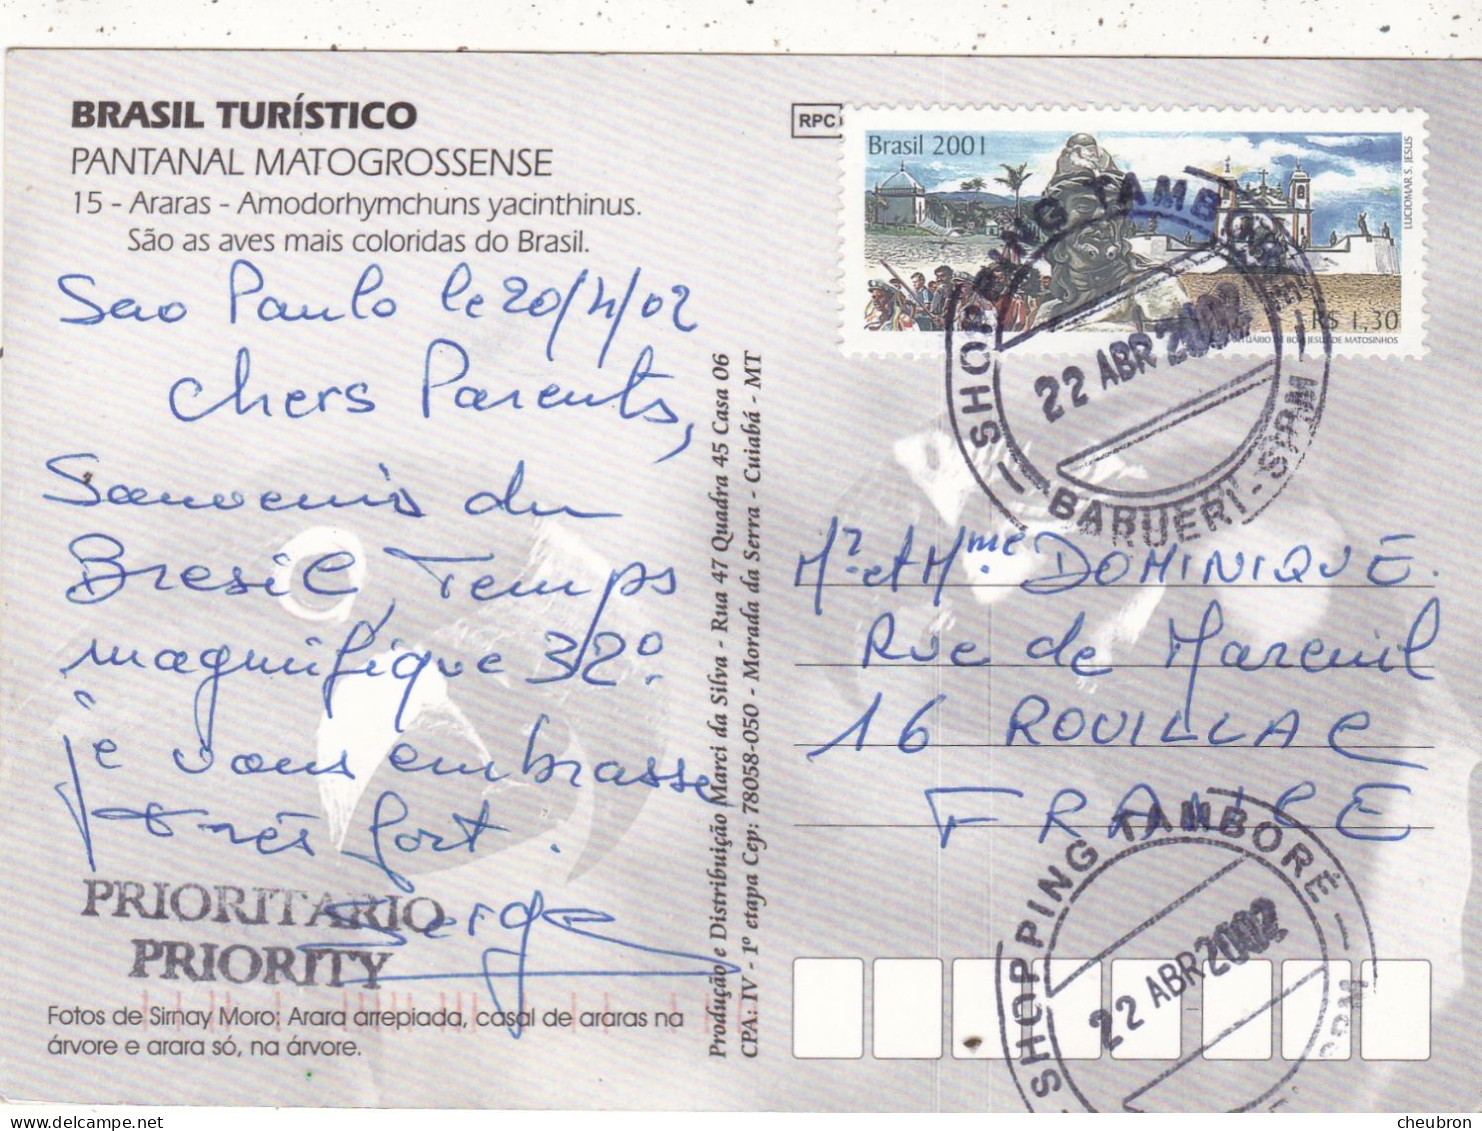 BRESIL. SAO PAULO ( ENVOYE DE) MATOGROSSENSE. PERROQUETS "ARARAS AMODORHYMCHUNS YACINTHINUS"ANNEE 2002 + TEXTE + TIMBRE - Salvador De Bahia